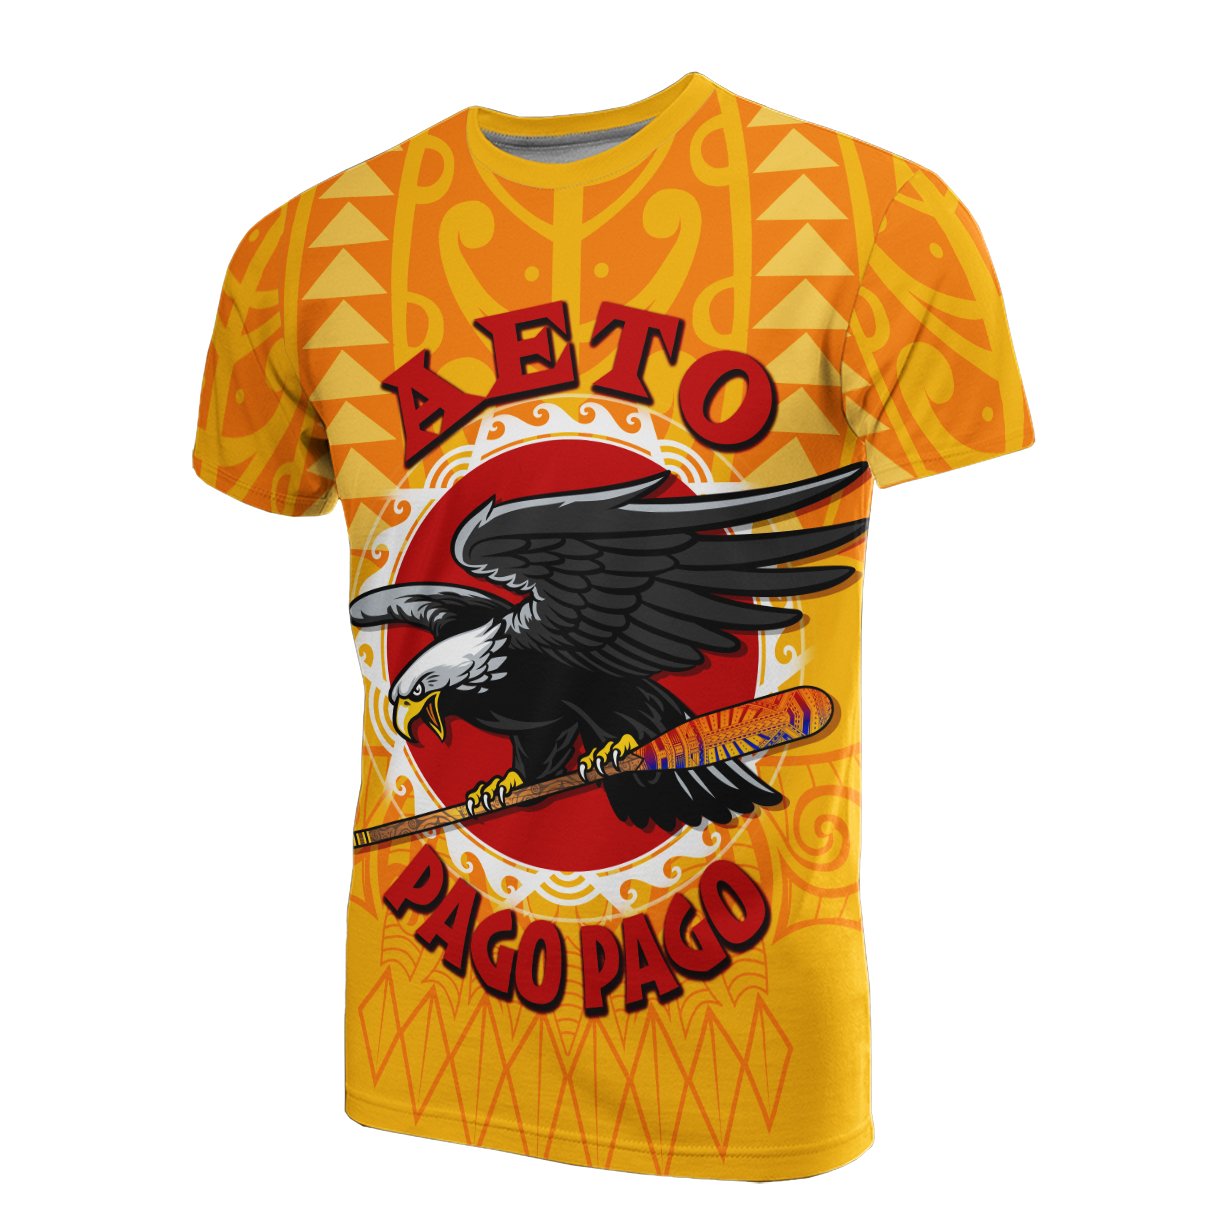 American Samoa T-Shirt  - Aeto Pago Pago